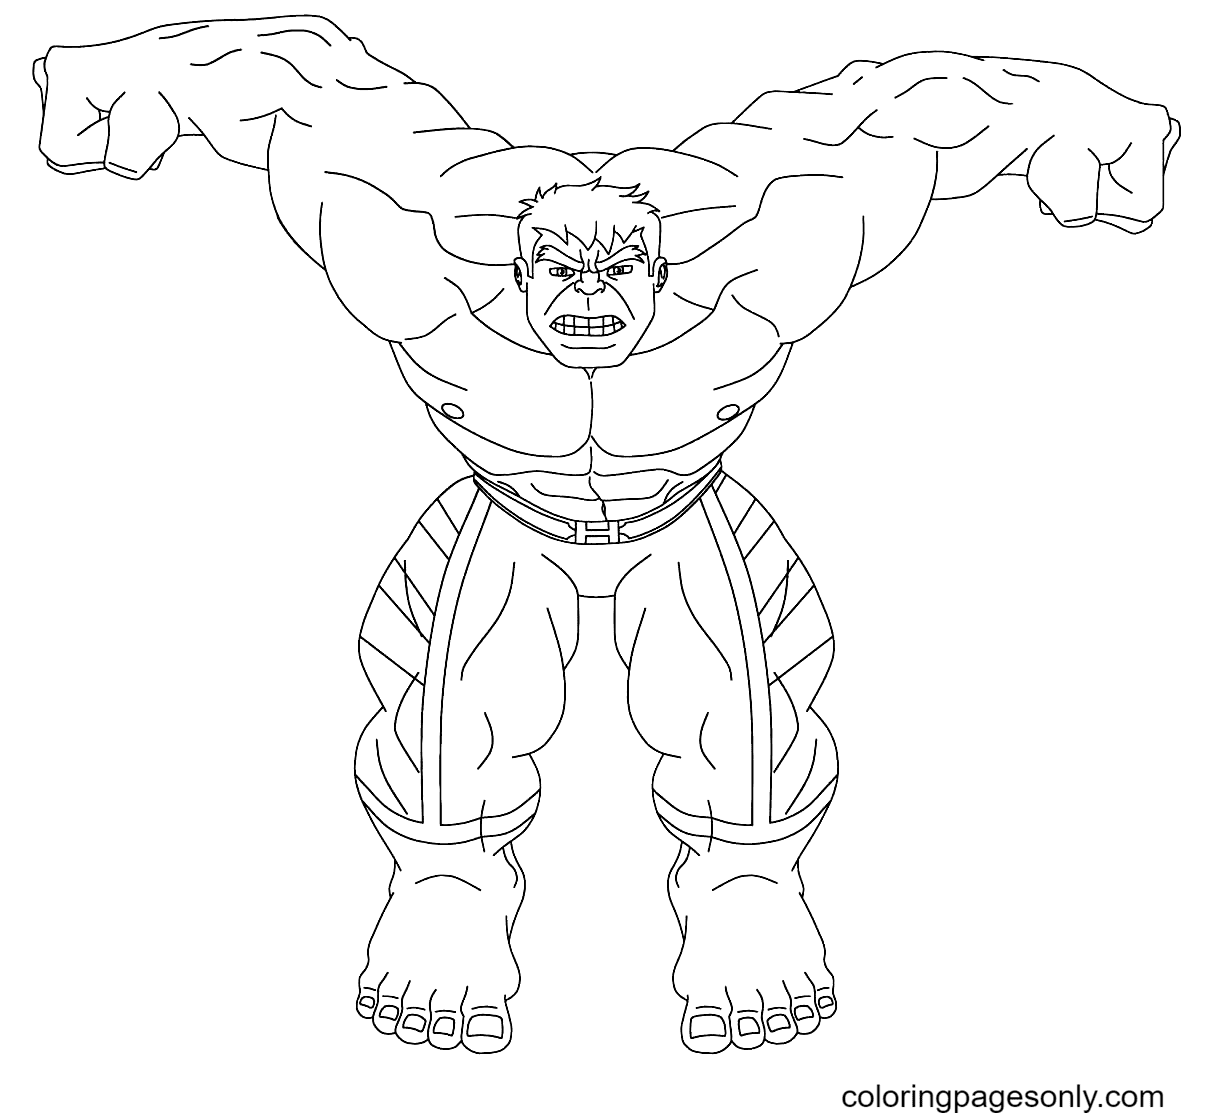 Página para colorir grátis do Hulk